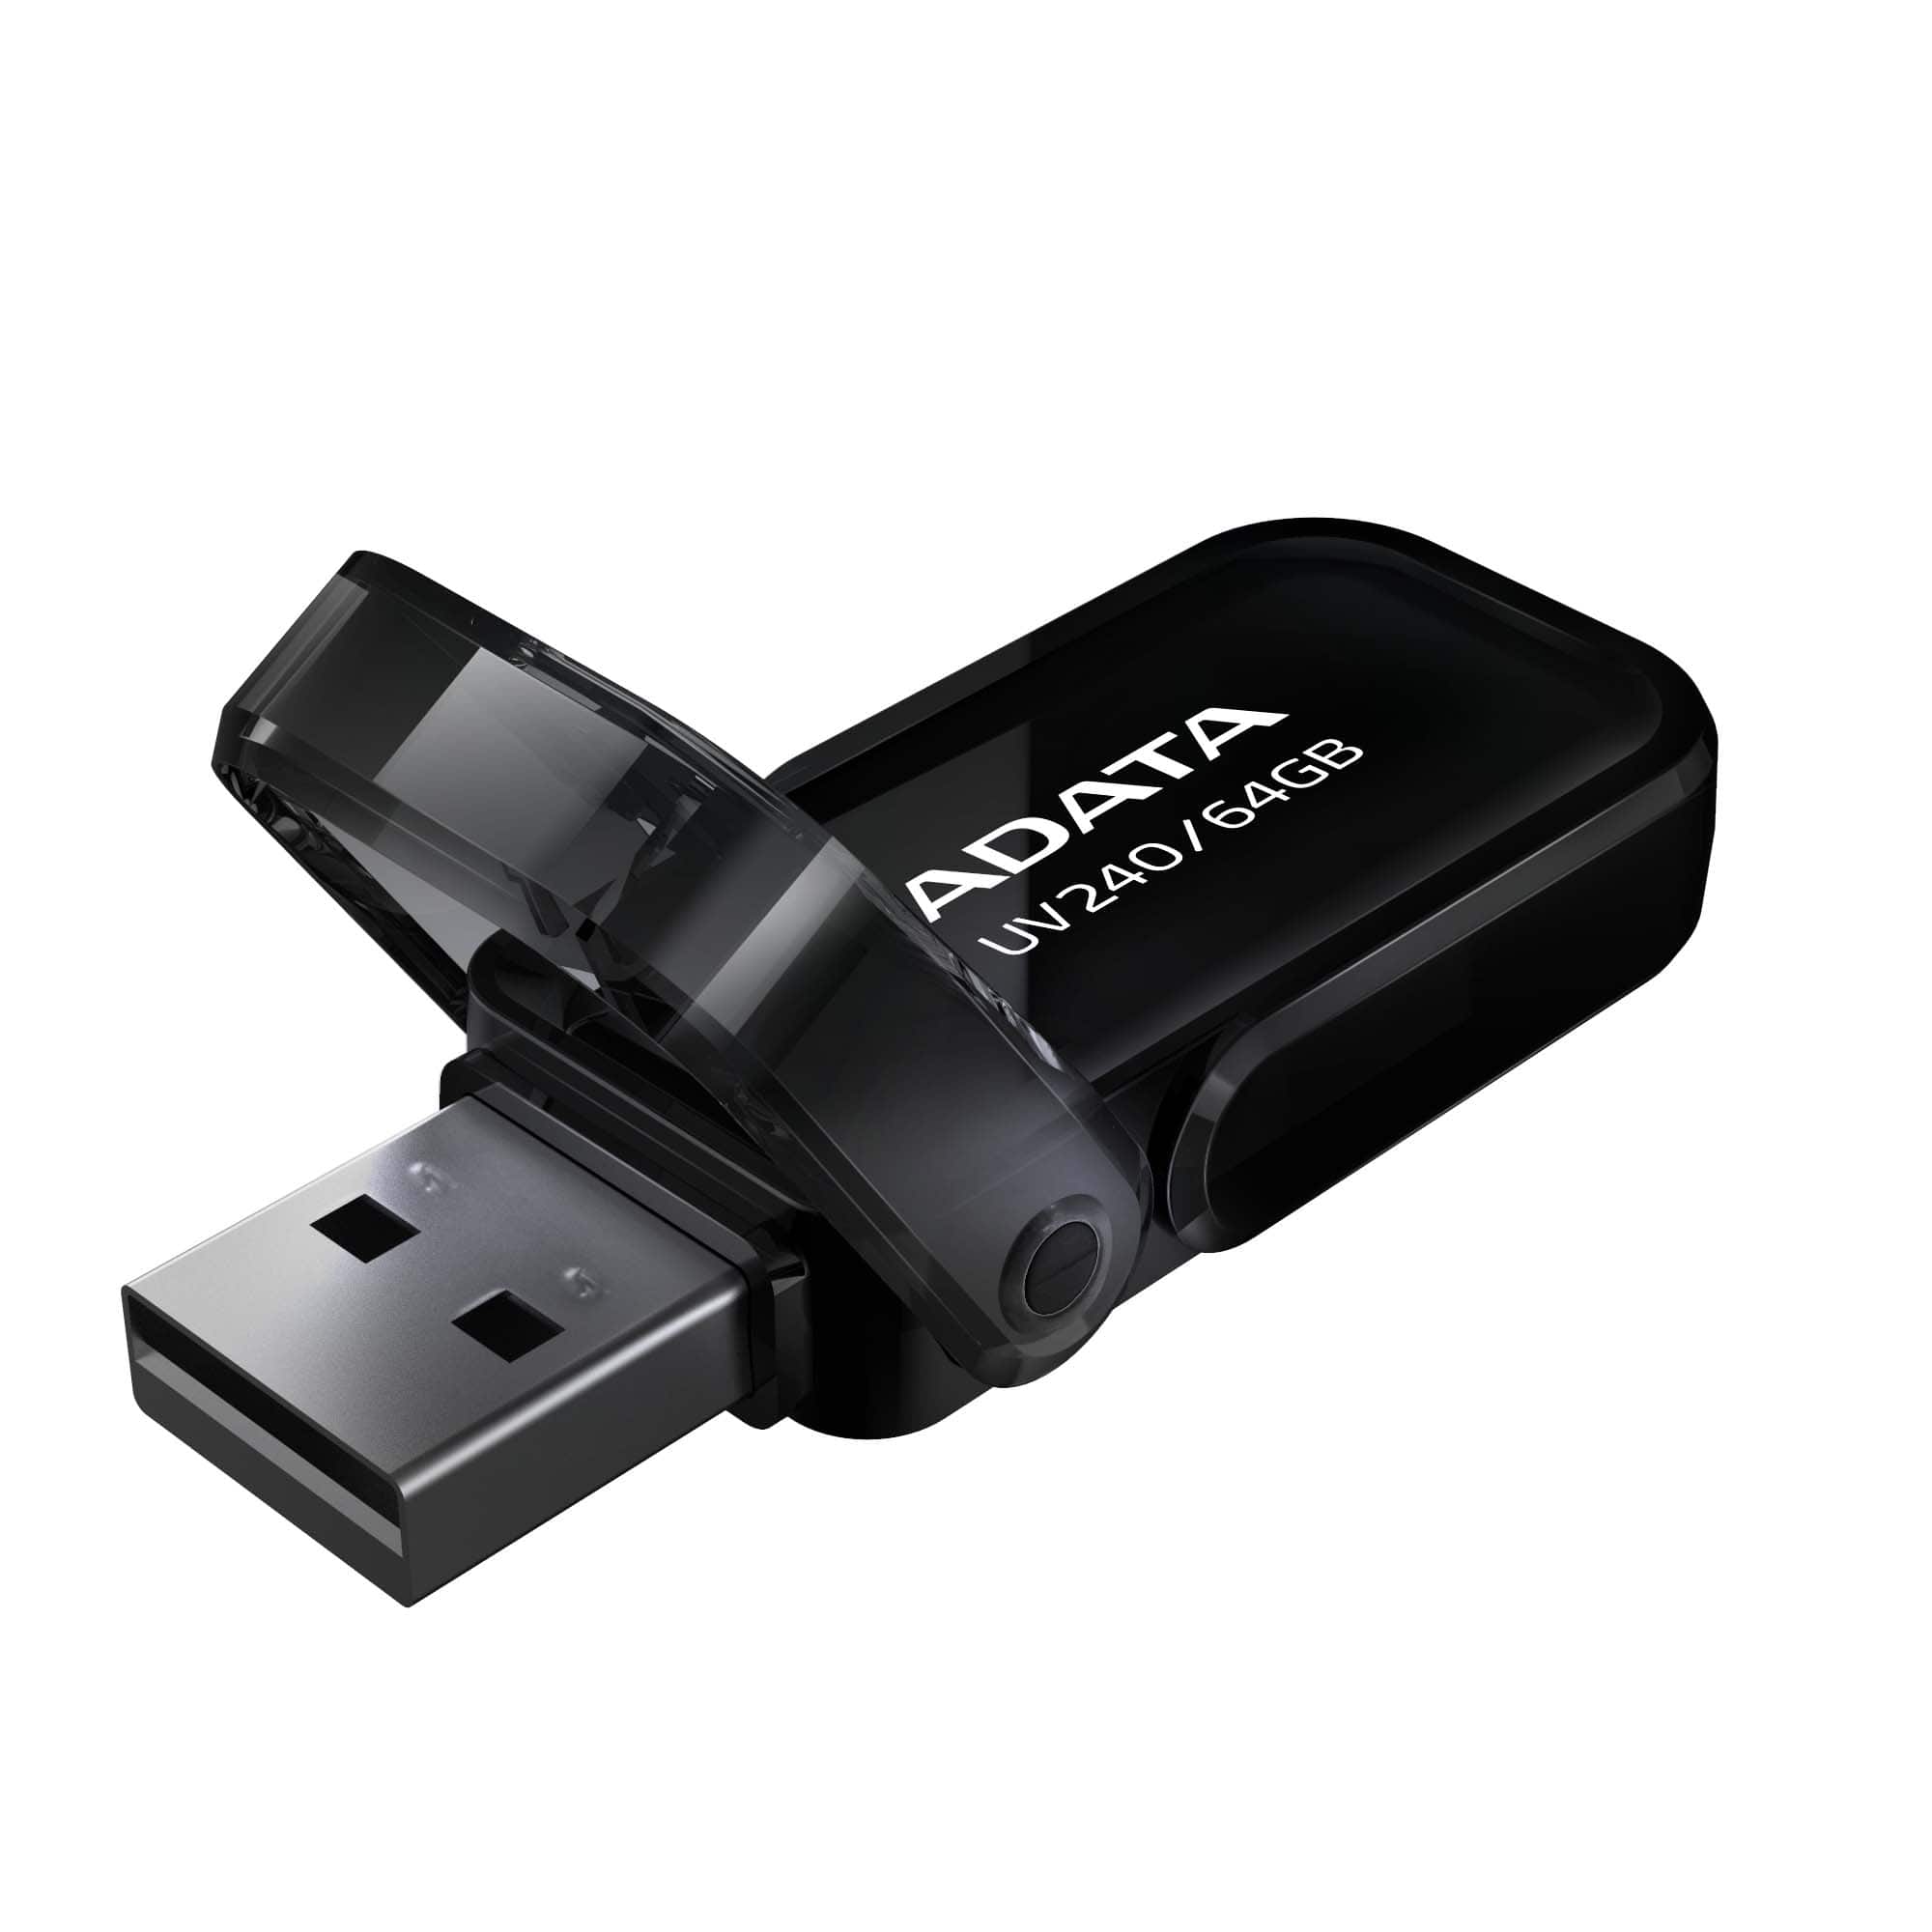 USB klíč A-DATA UV240, 64GB, Black (AUV240-64G-RBK)